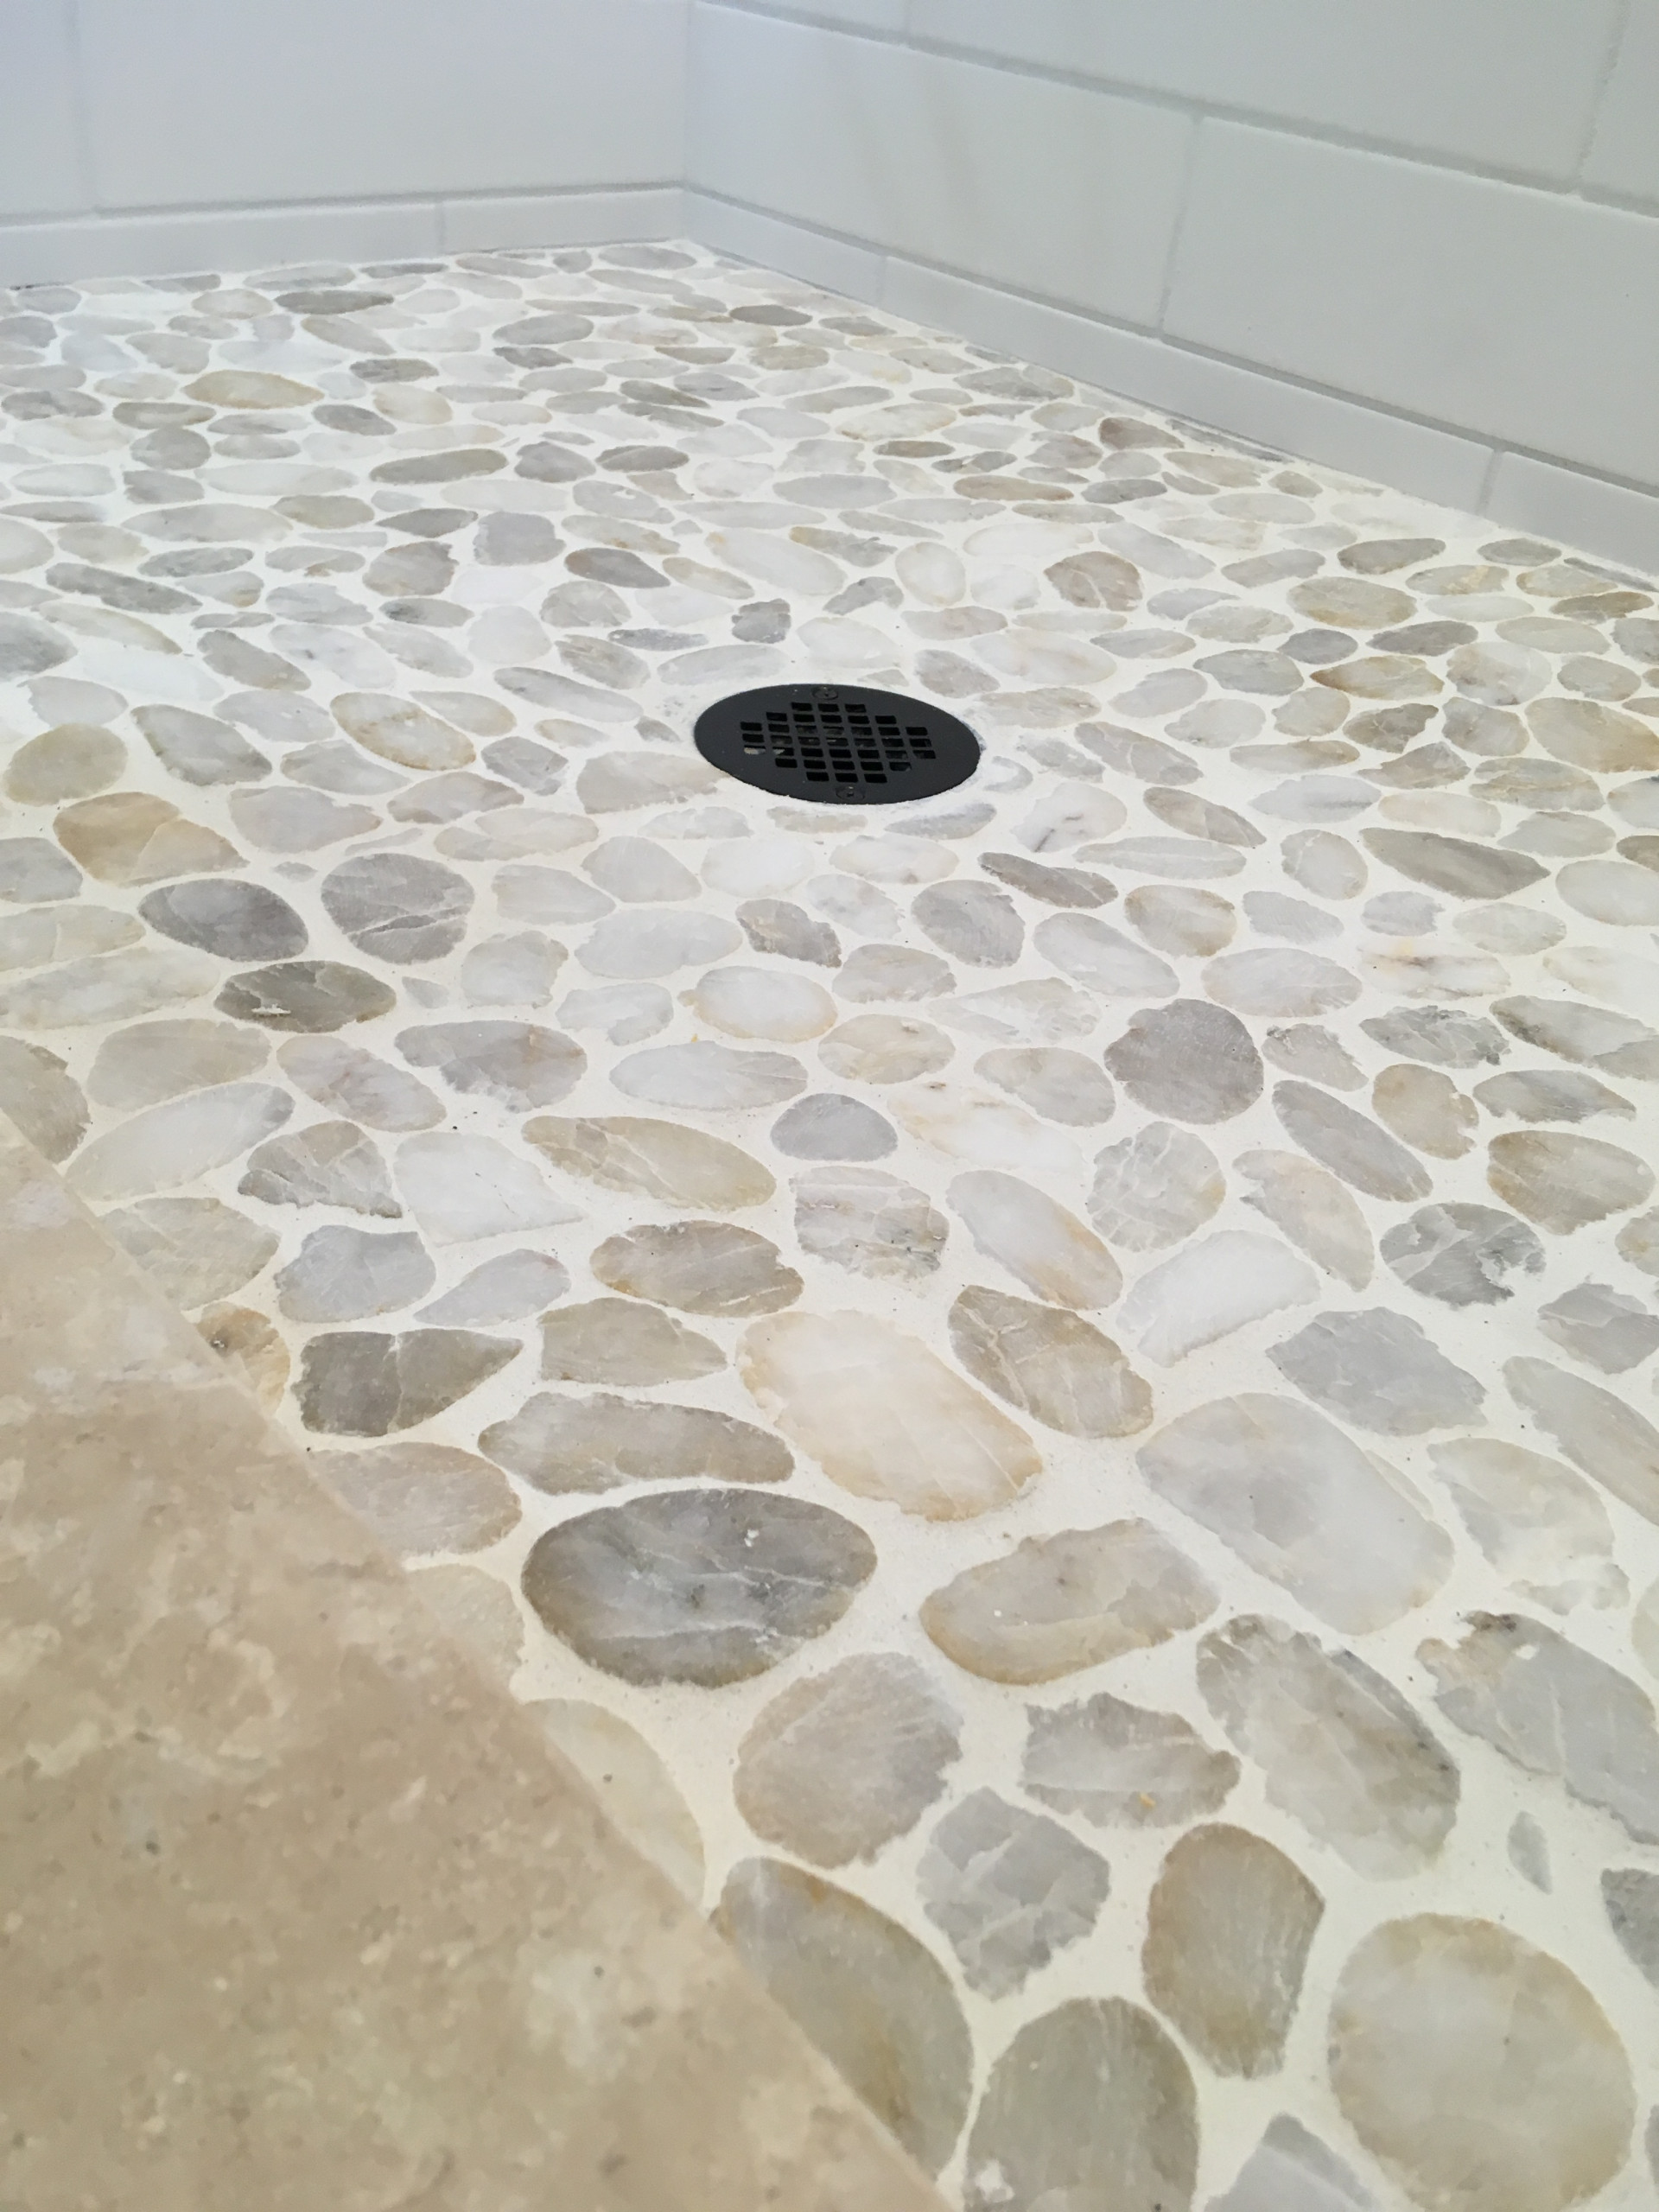 Stone shower floor